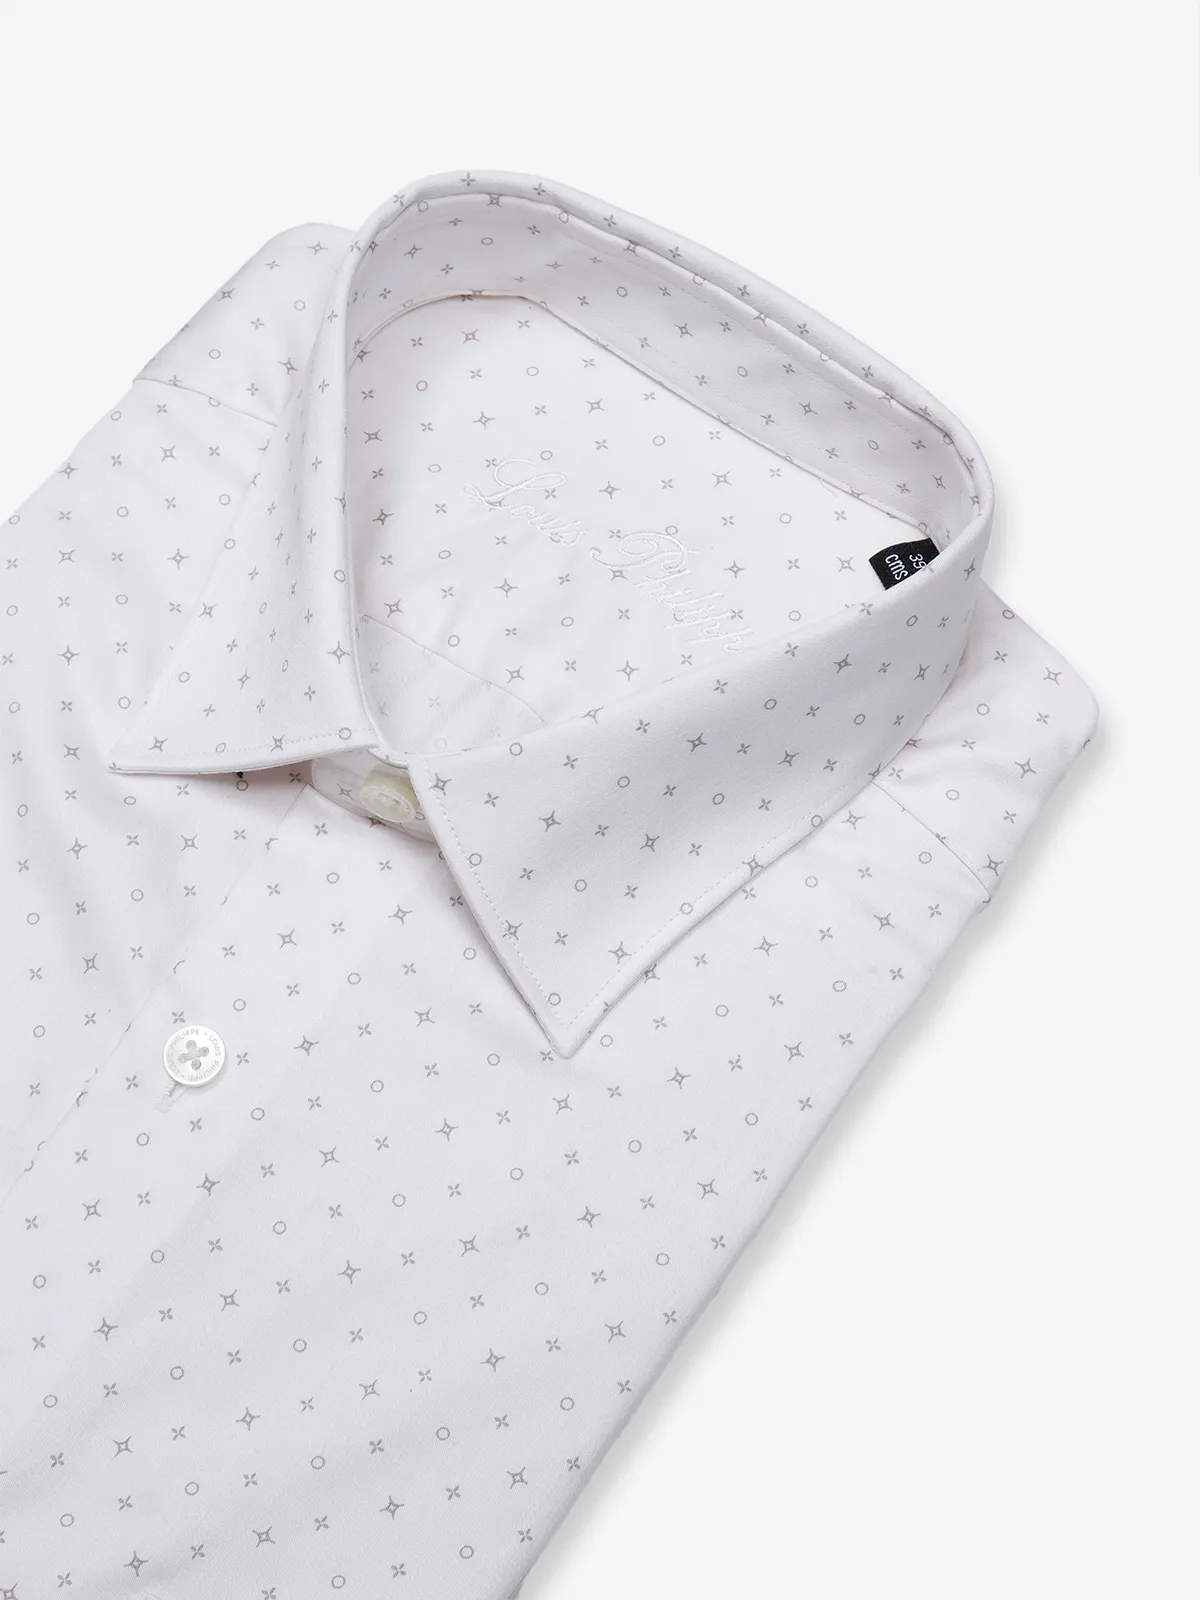 Louis Philippe white cotton printed shirt